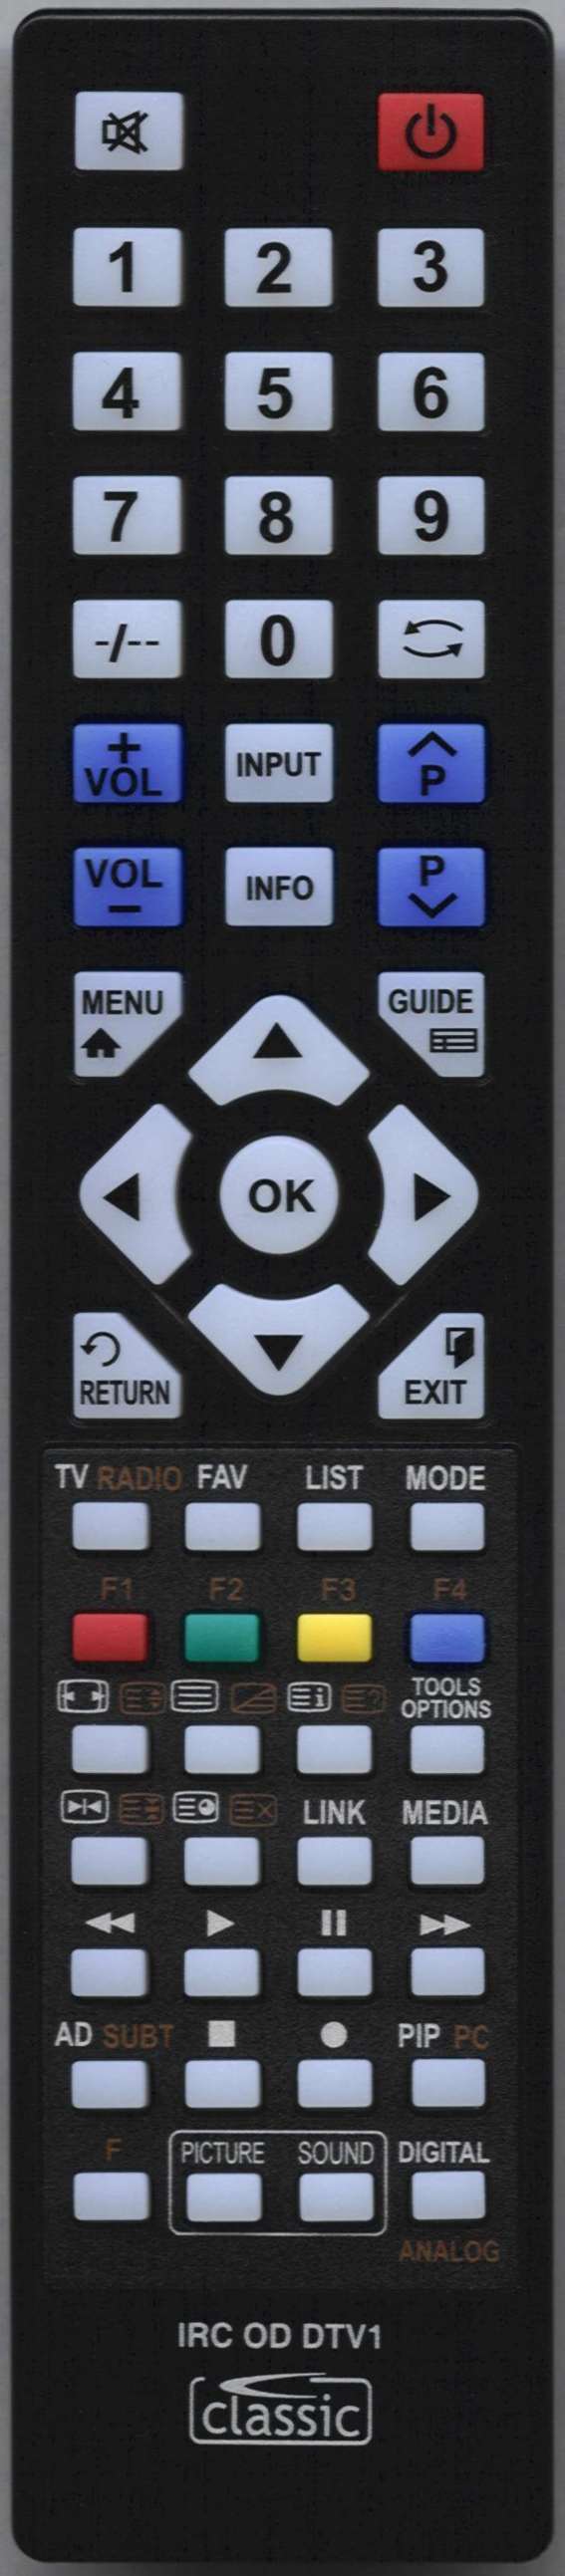 SEIKI SE24HD01UK Remote Control